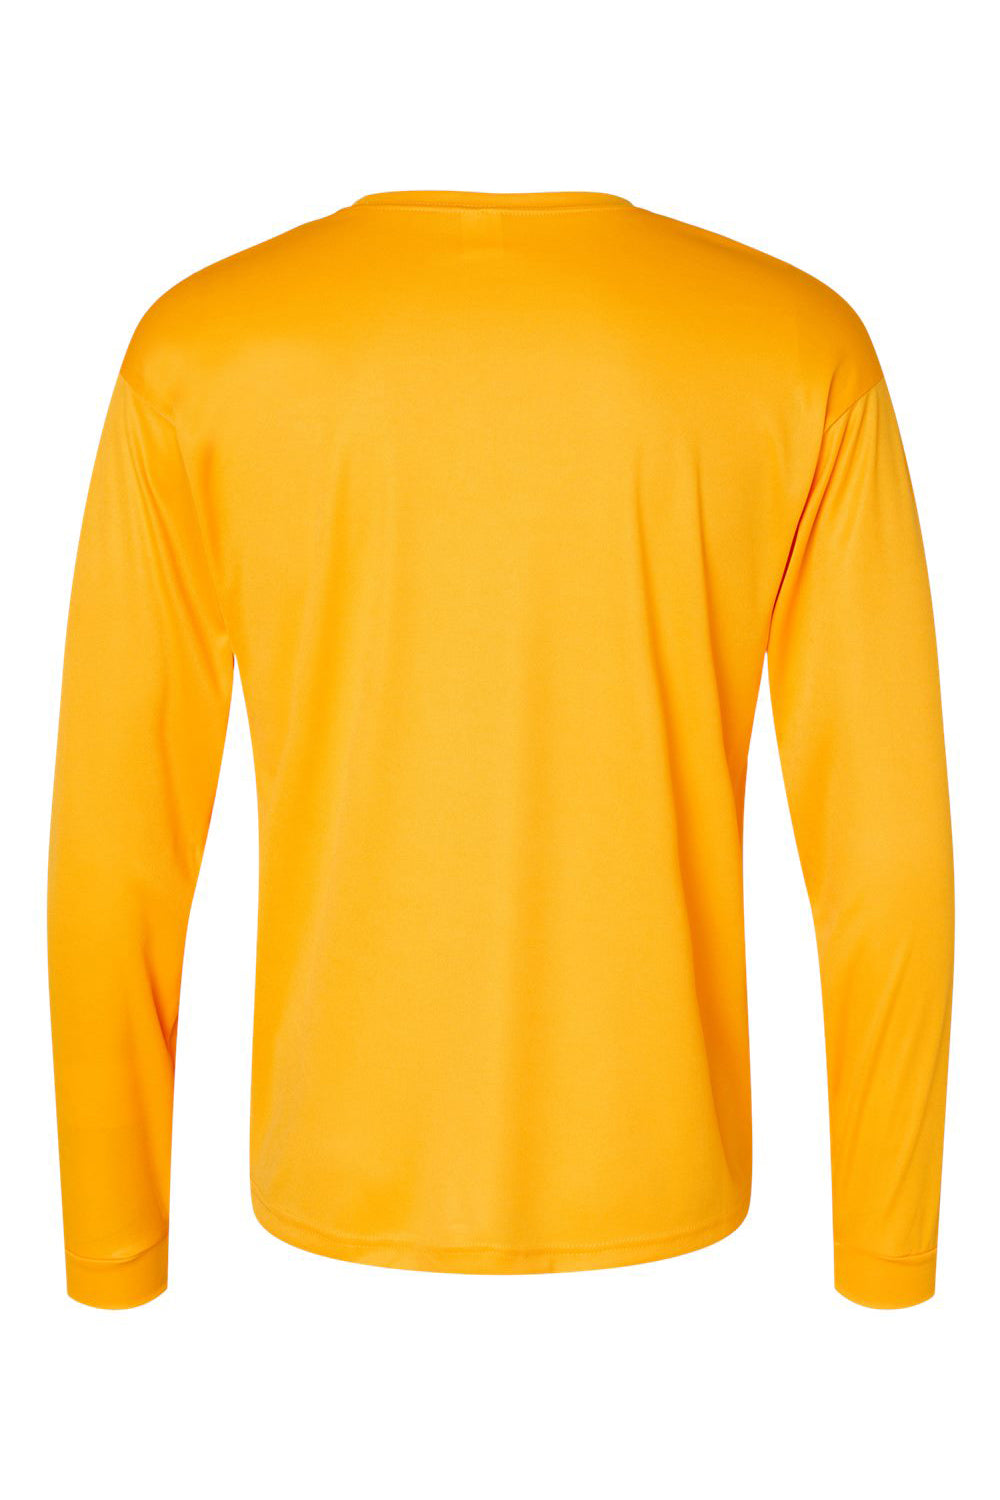 C2 Sport 5104 Mens Performance Moisture Wicking Long Sleeve Crewneck T-Shirt Gold Flat Back